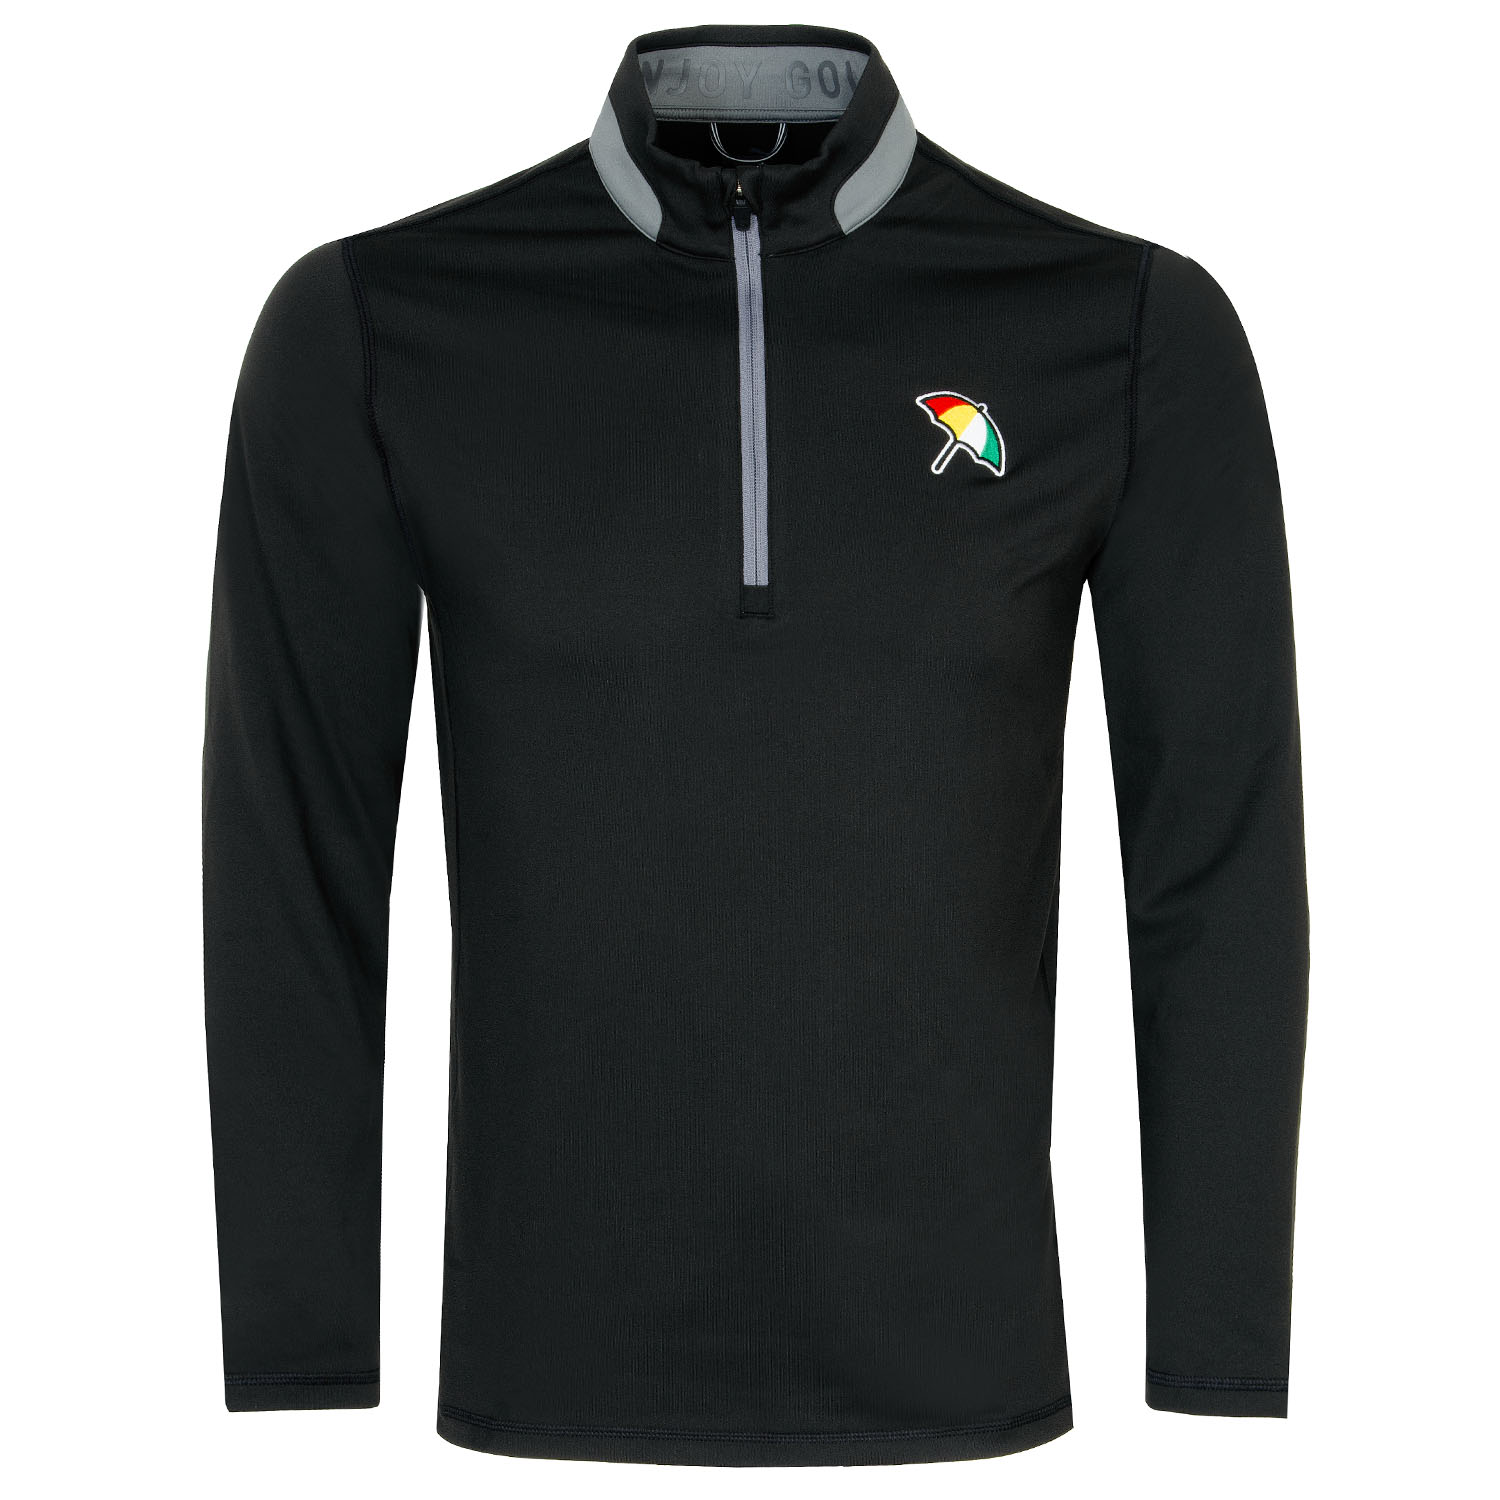 PUMA x Arnold Palmer Lightweight Zip Neck Golf Sweater